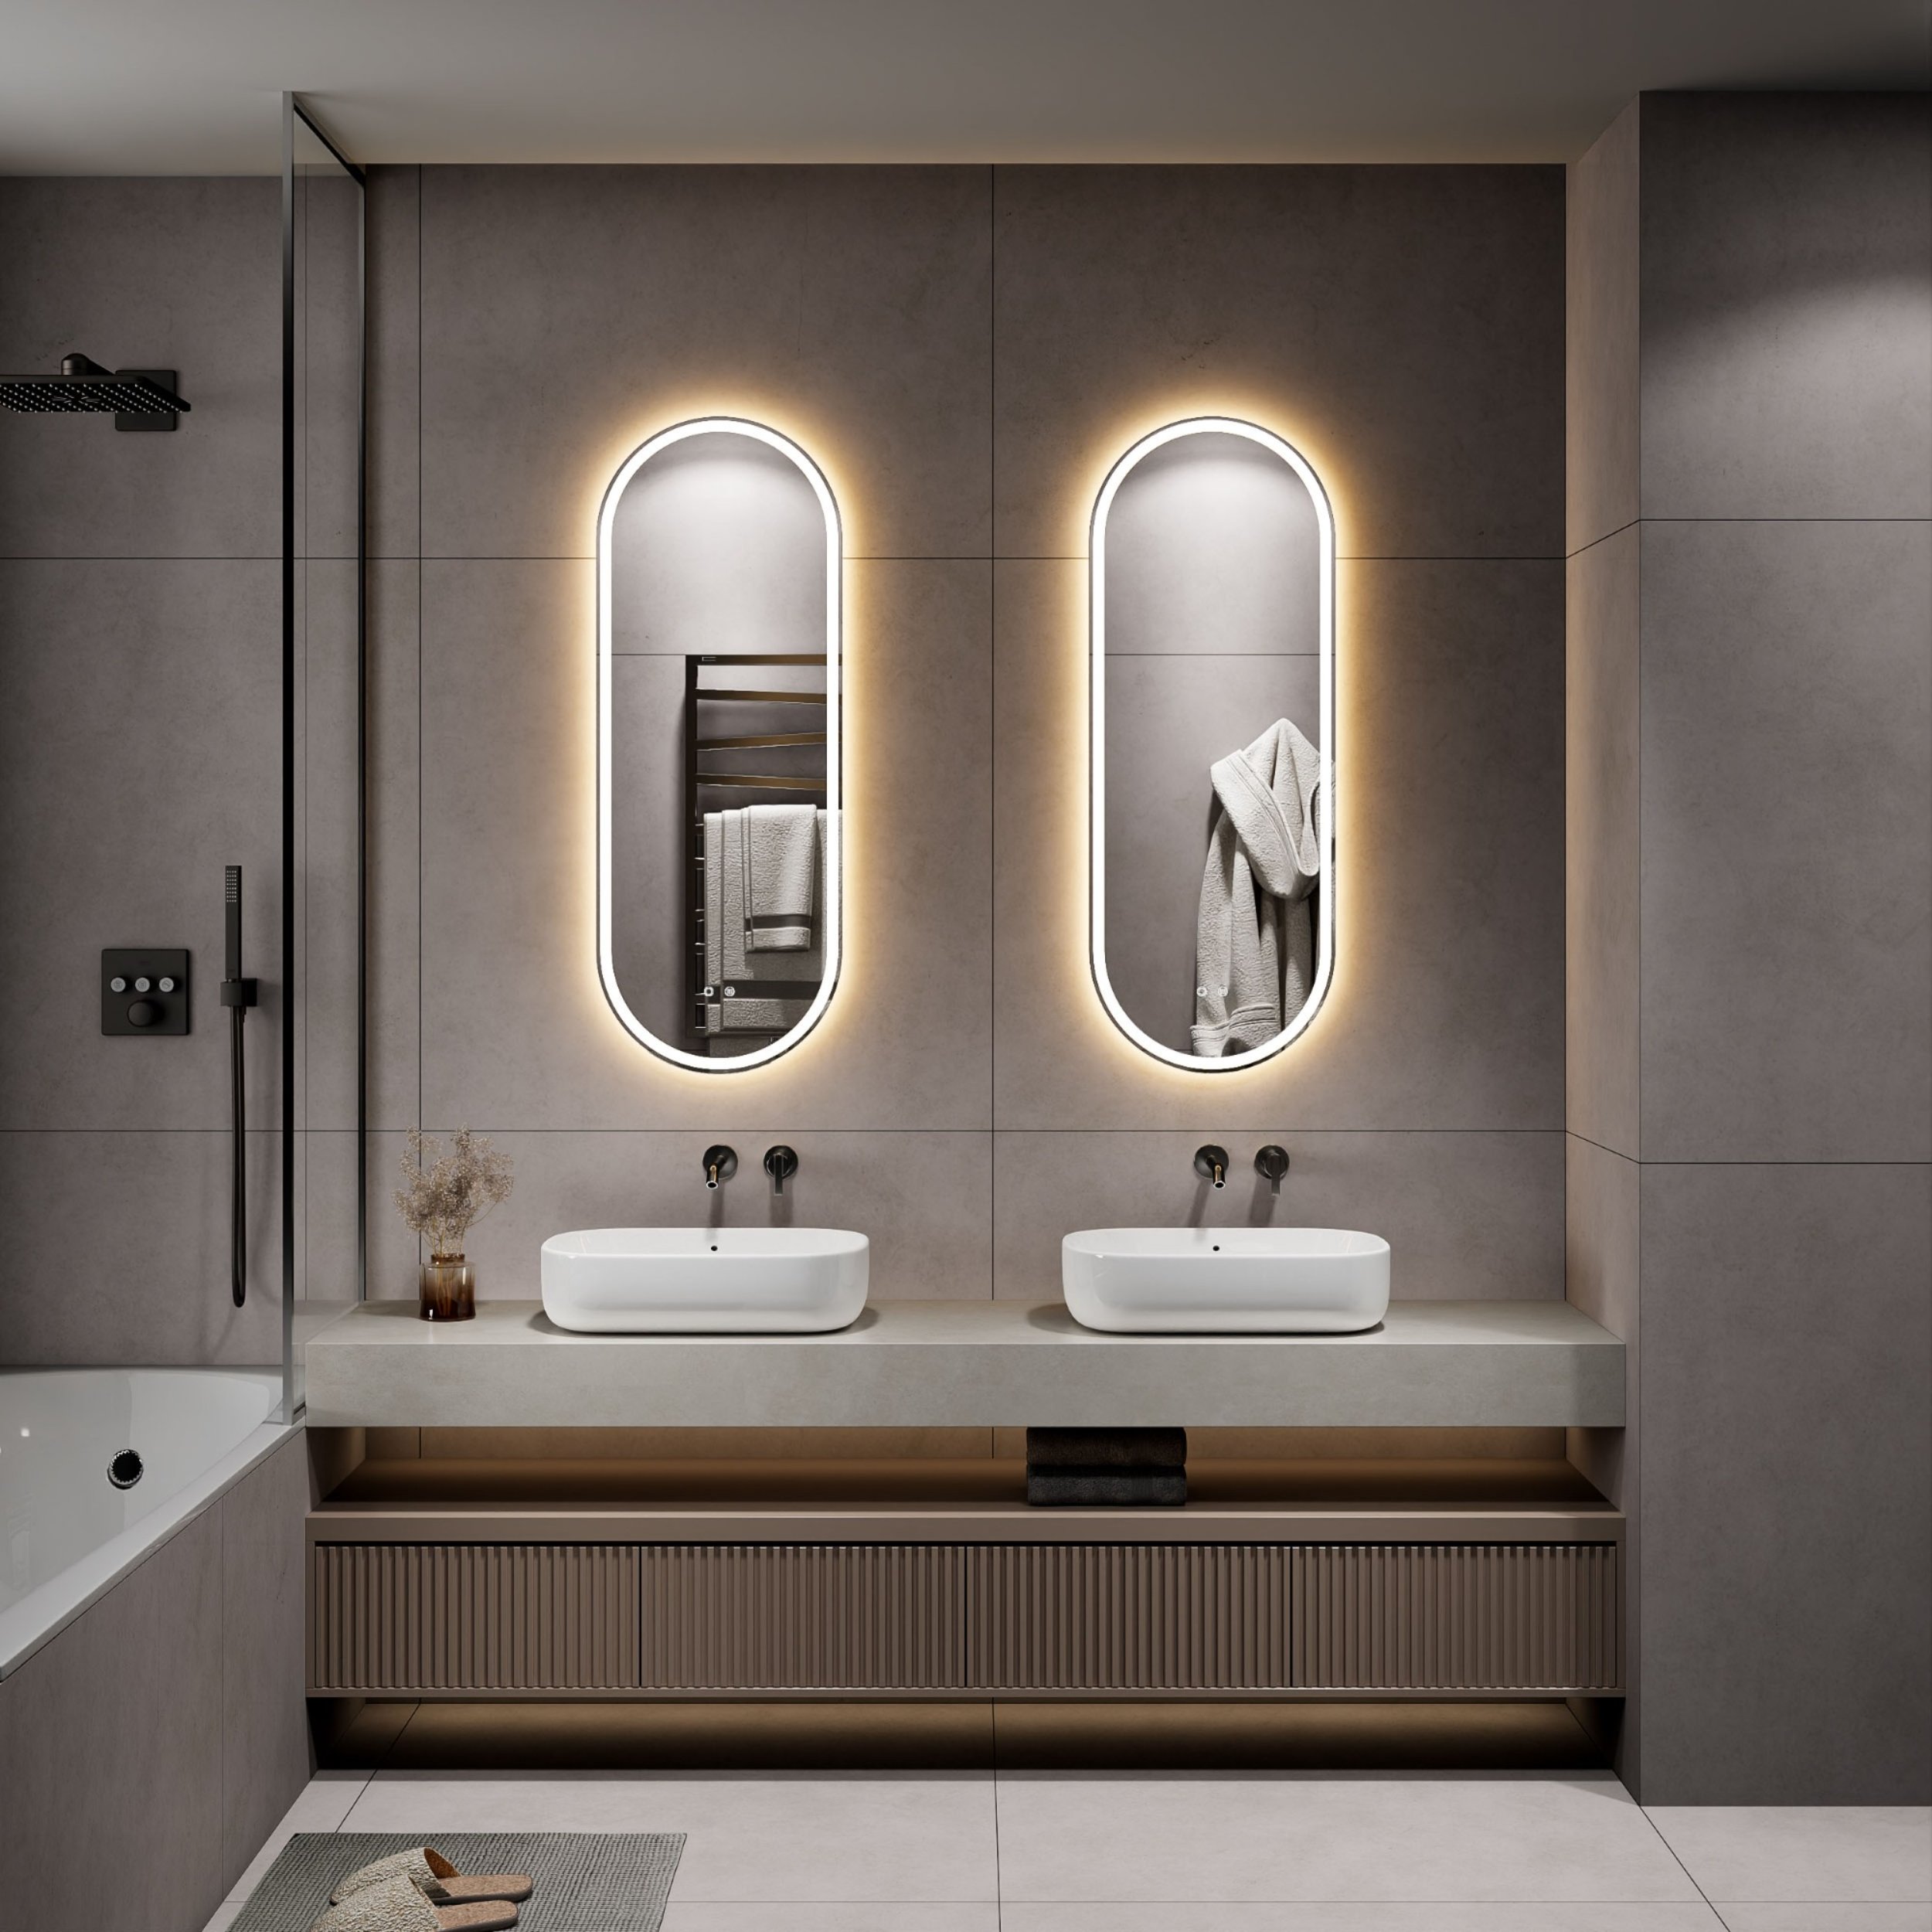 The New Standard - Dapai Mirror's LED Oval Bathroom Mirrors in Brisbane's Luxury Residences